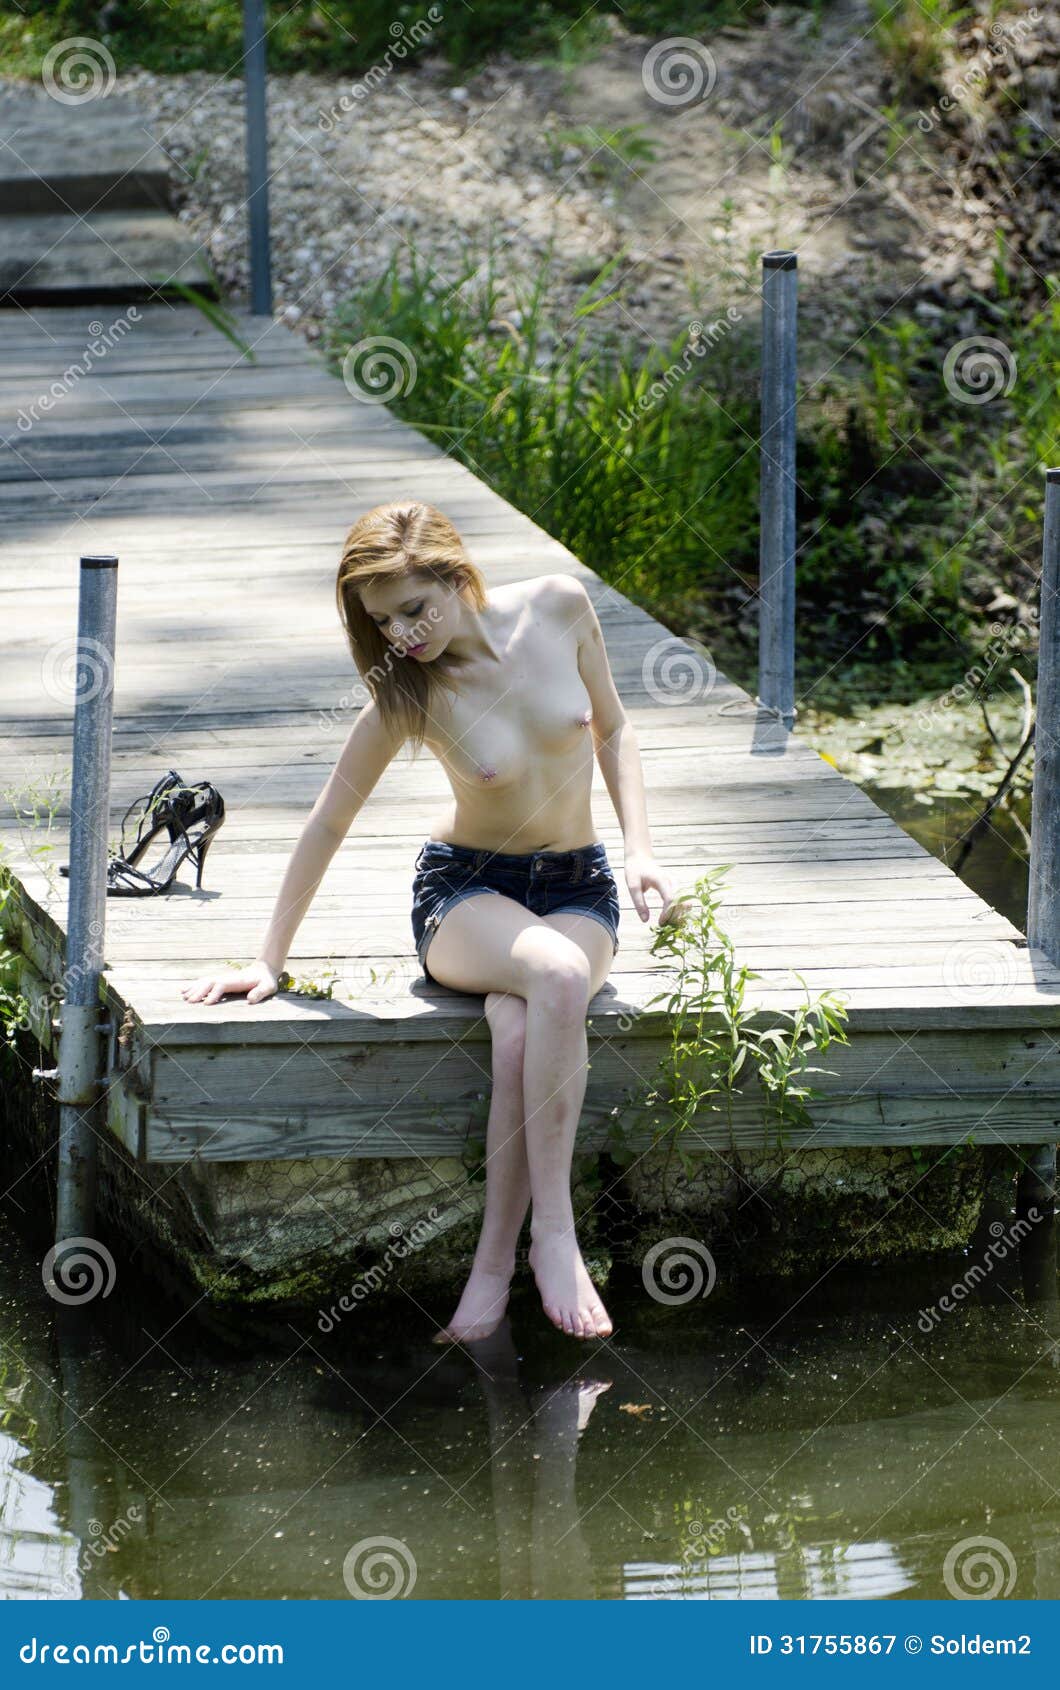 outdoor skinny dipping women xxx photo